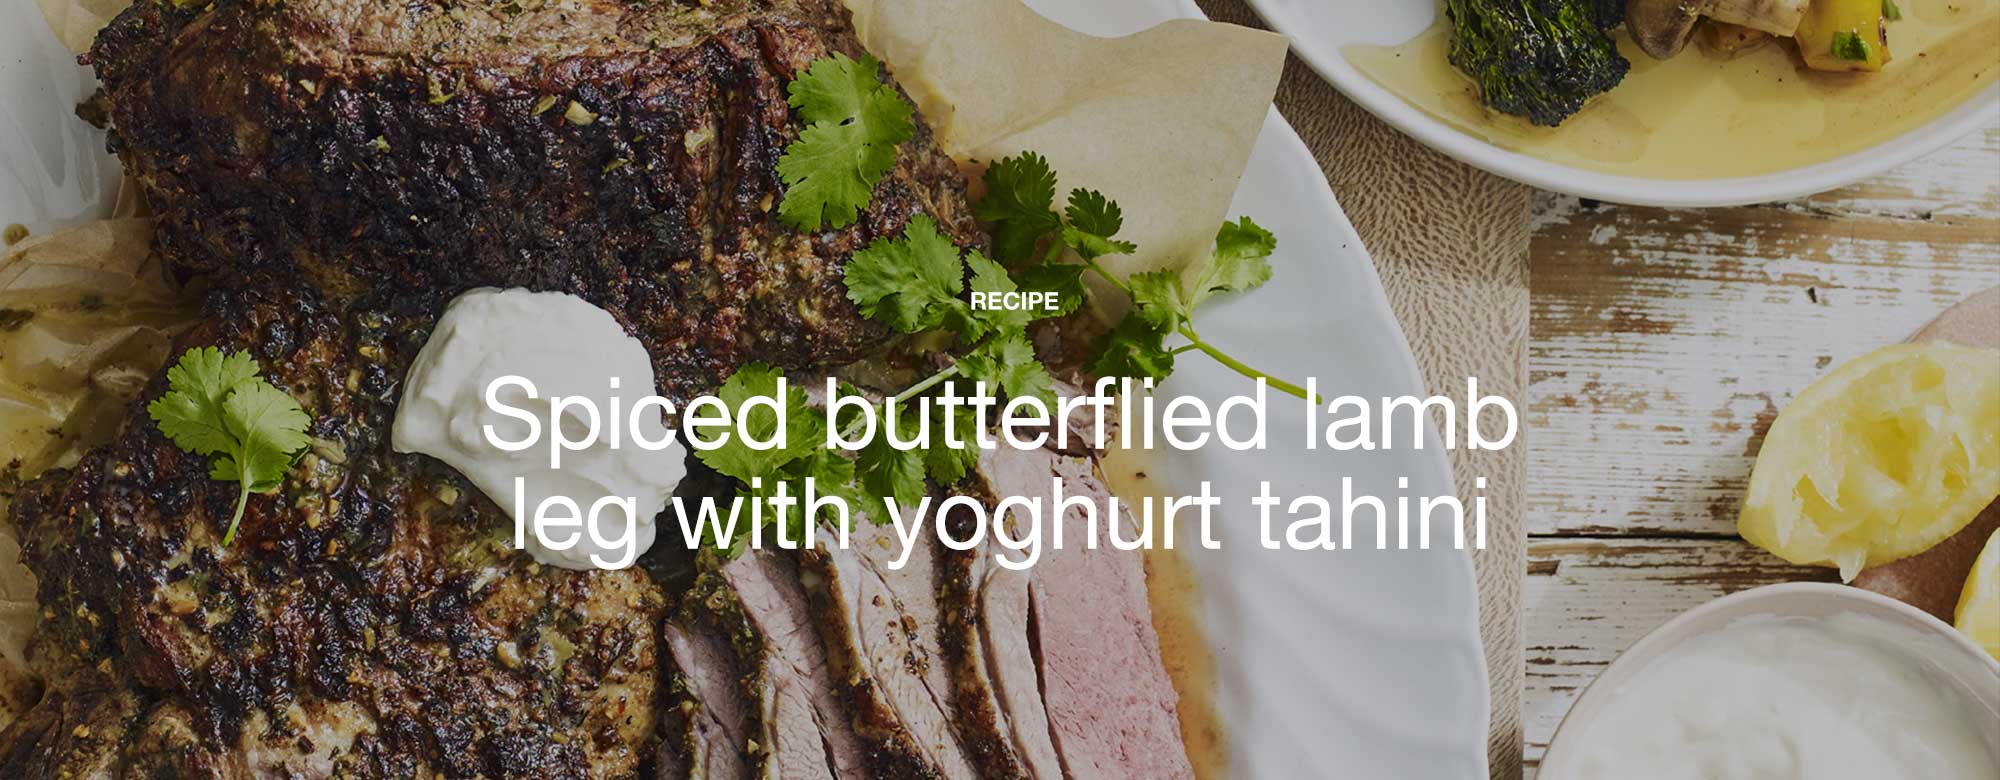 Spiced butterflied lamb leg with yoghurt tahini